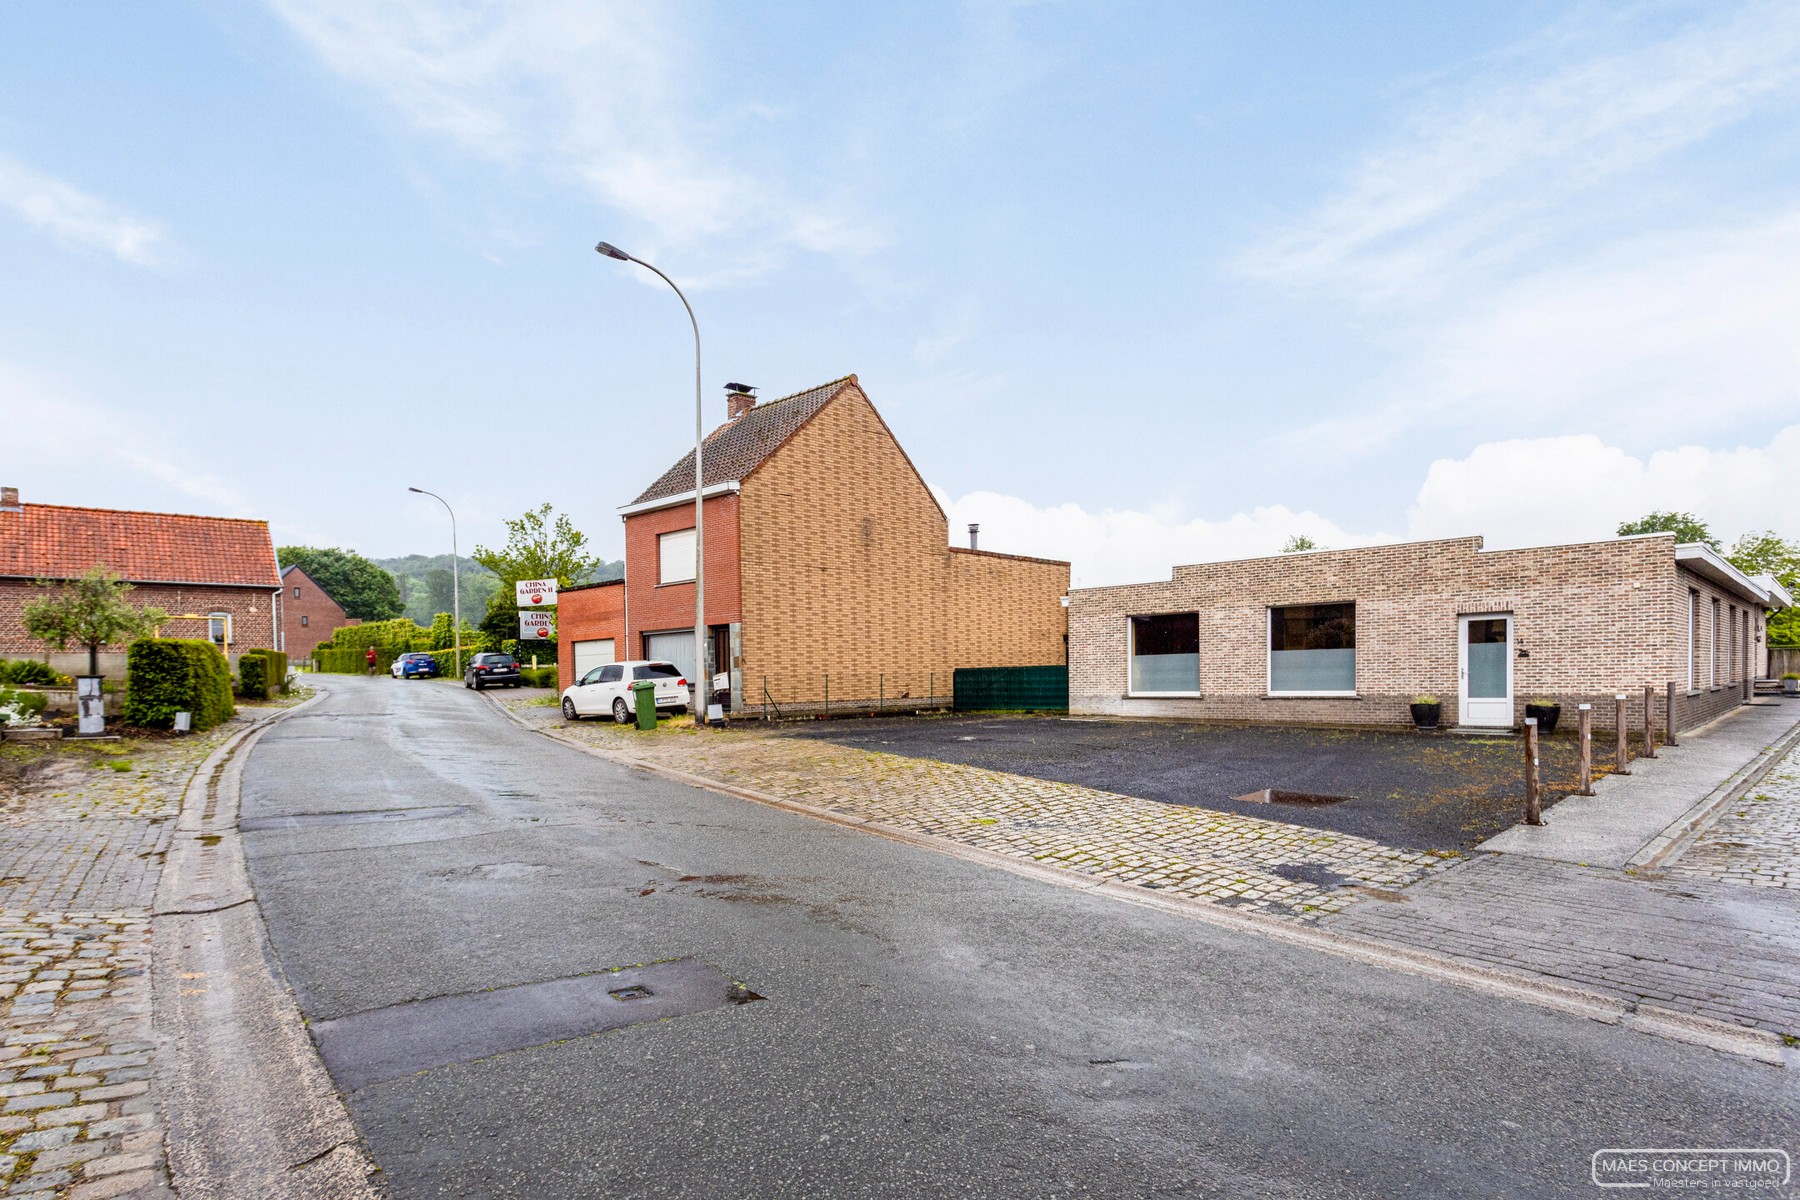 Handelspand met aanpalende woning in Kluisbergen foto 21